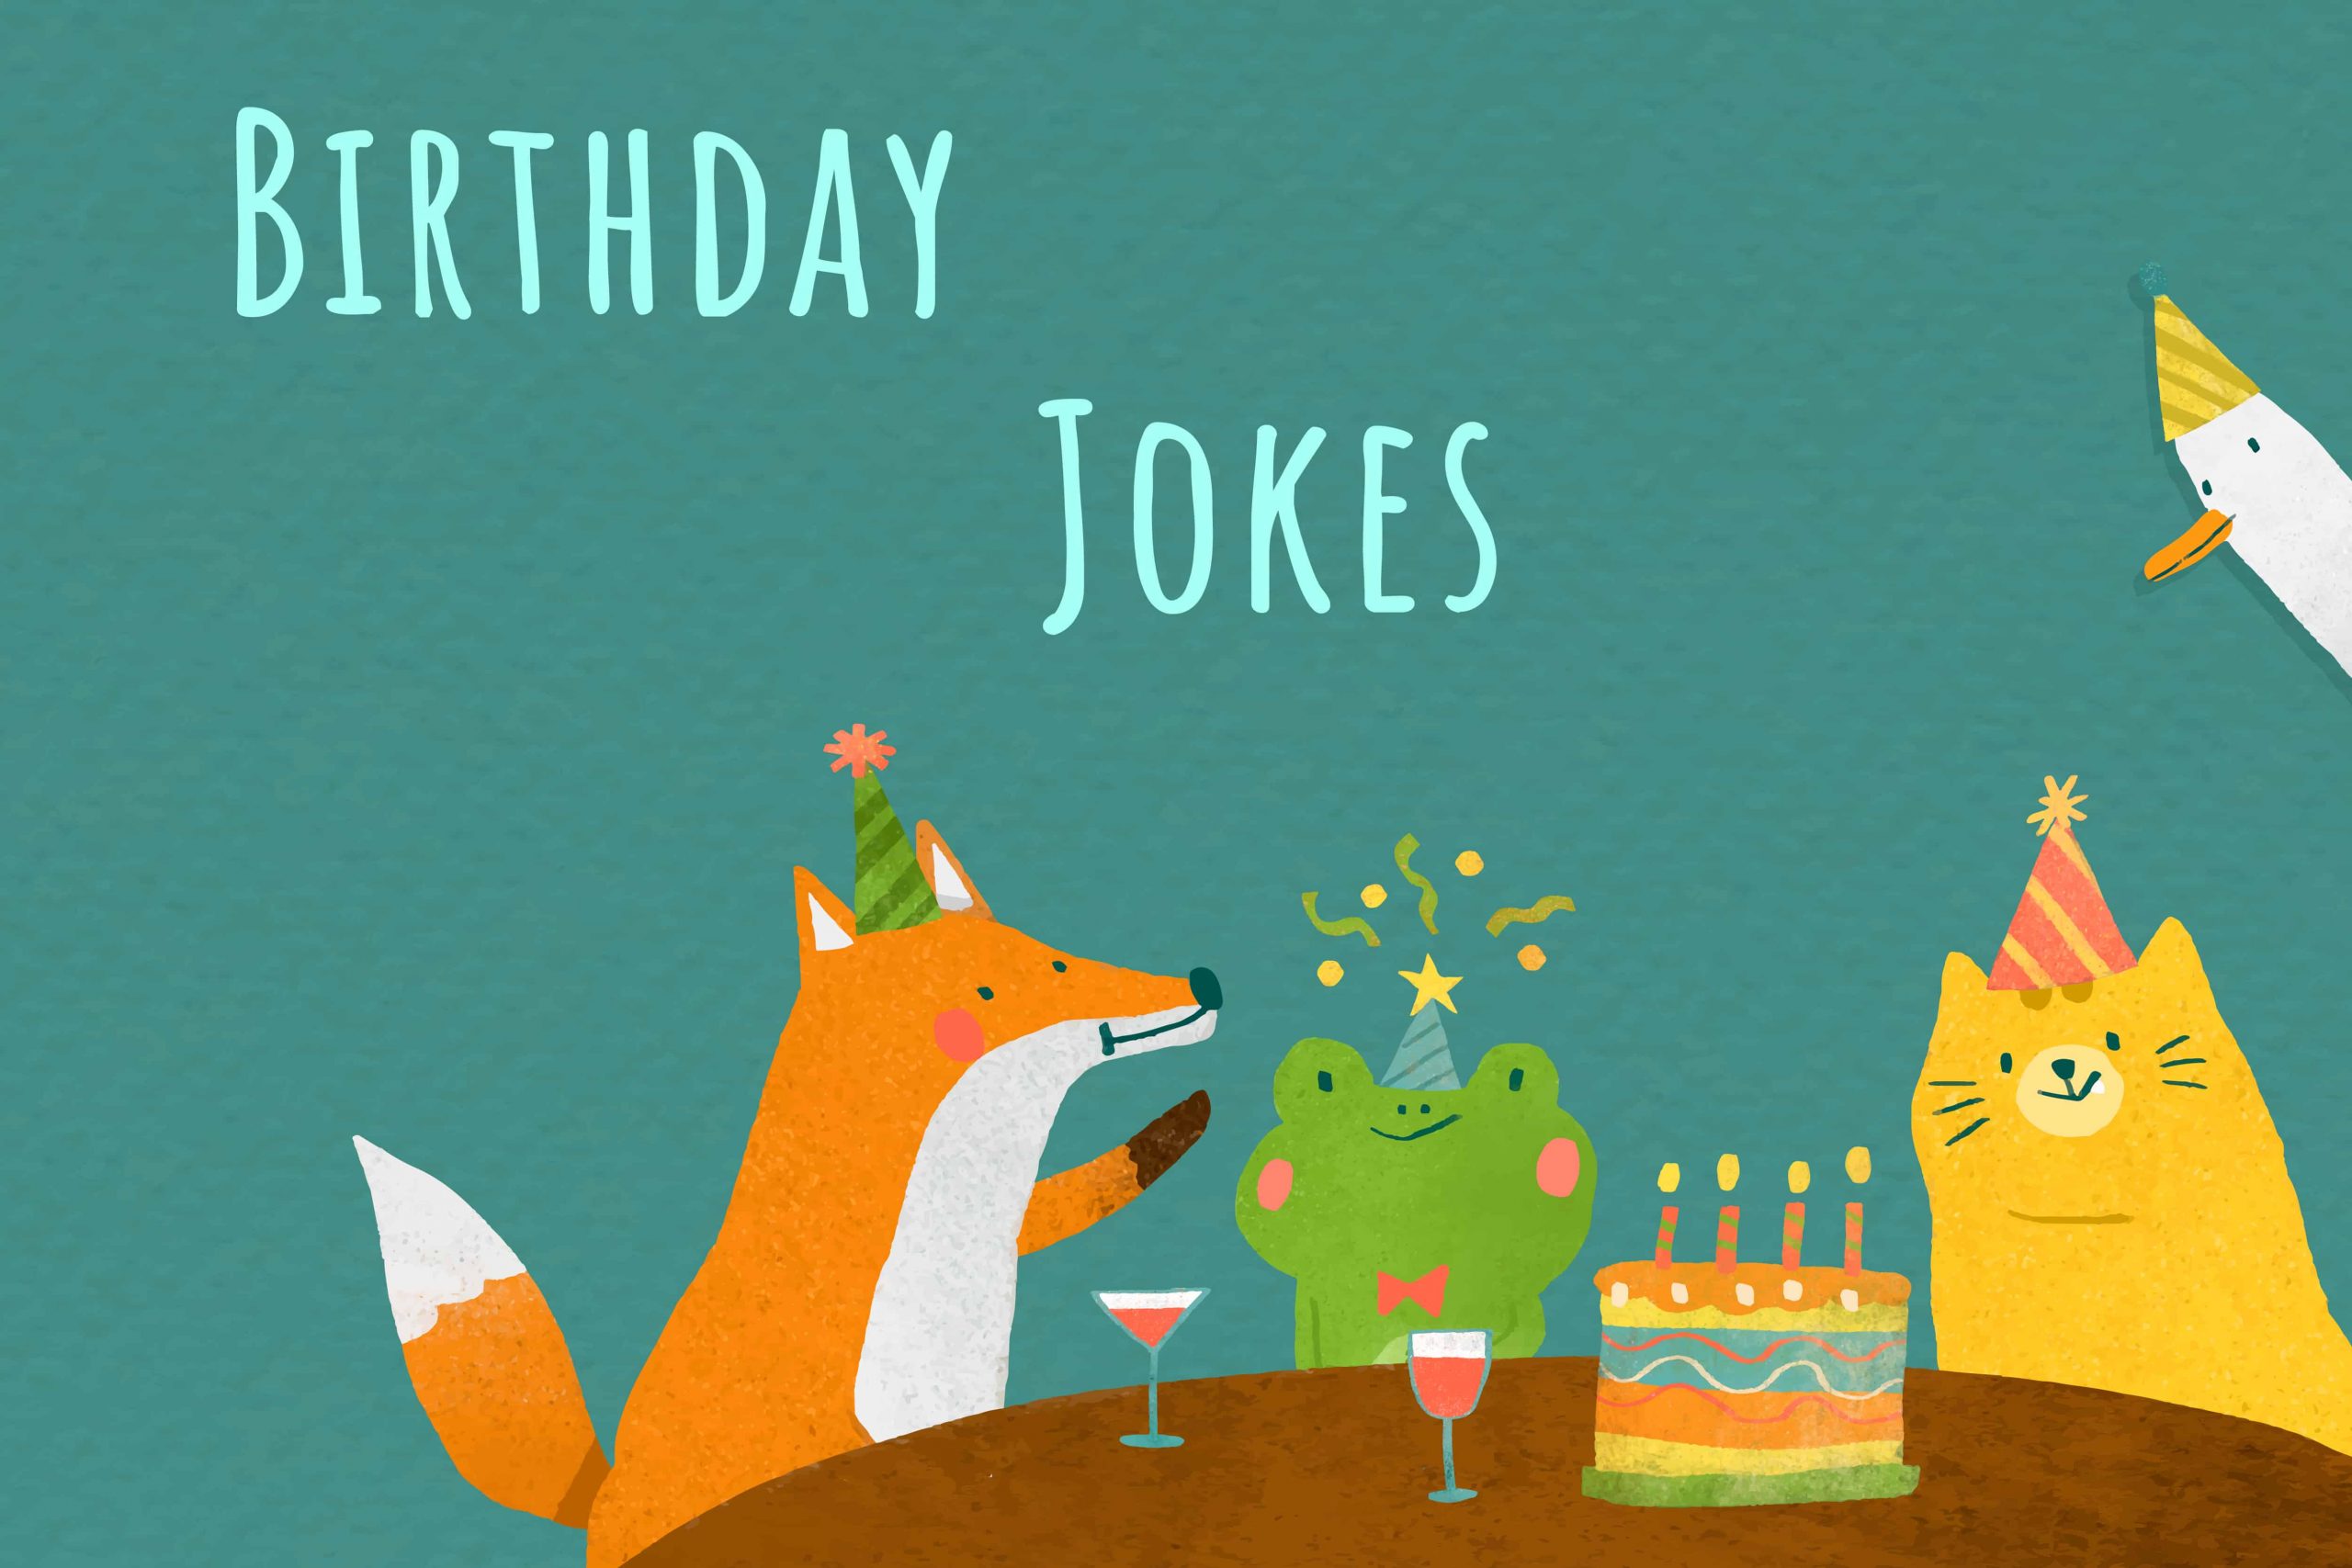 73 Short and Funny Birthday Jokes | March 2023